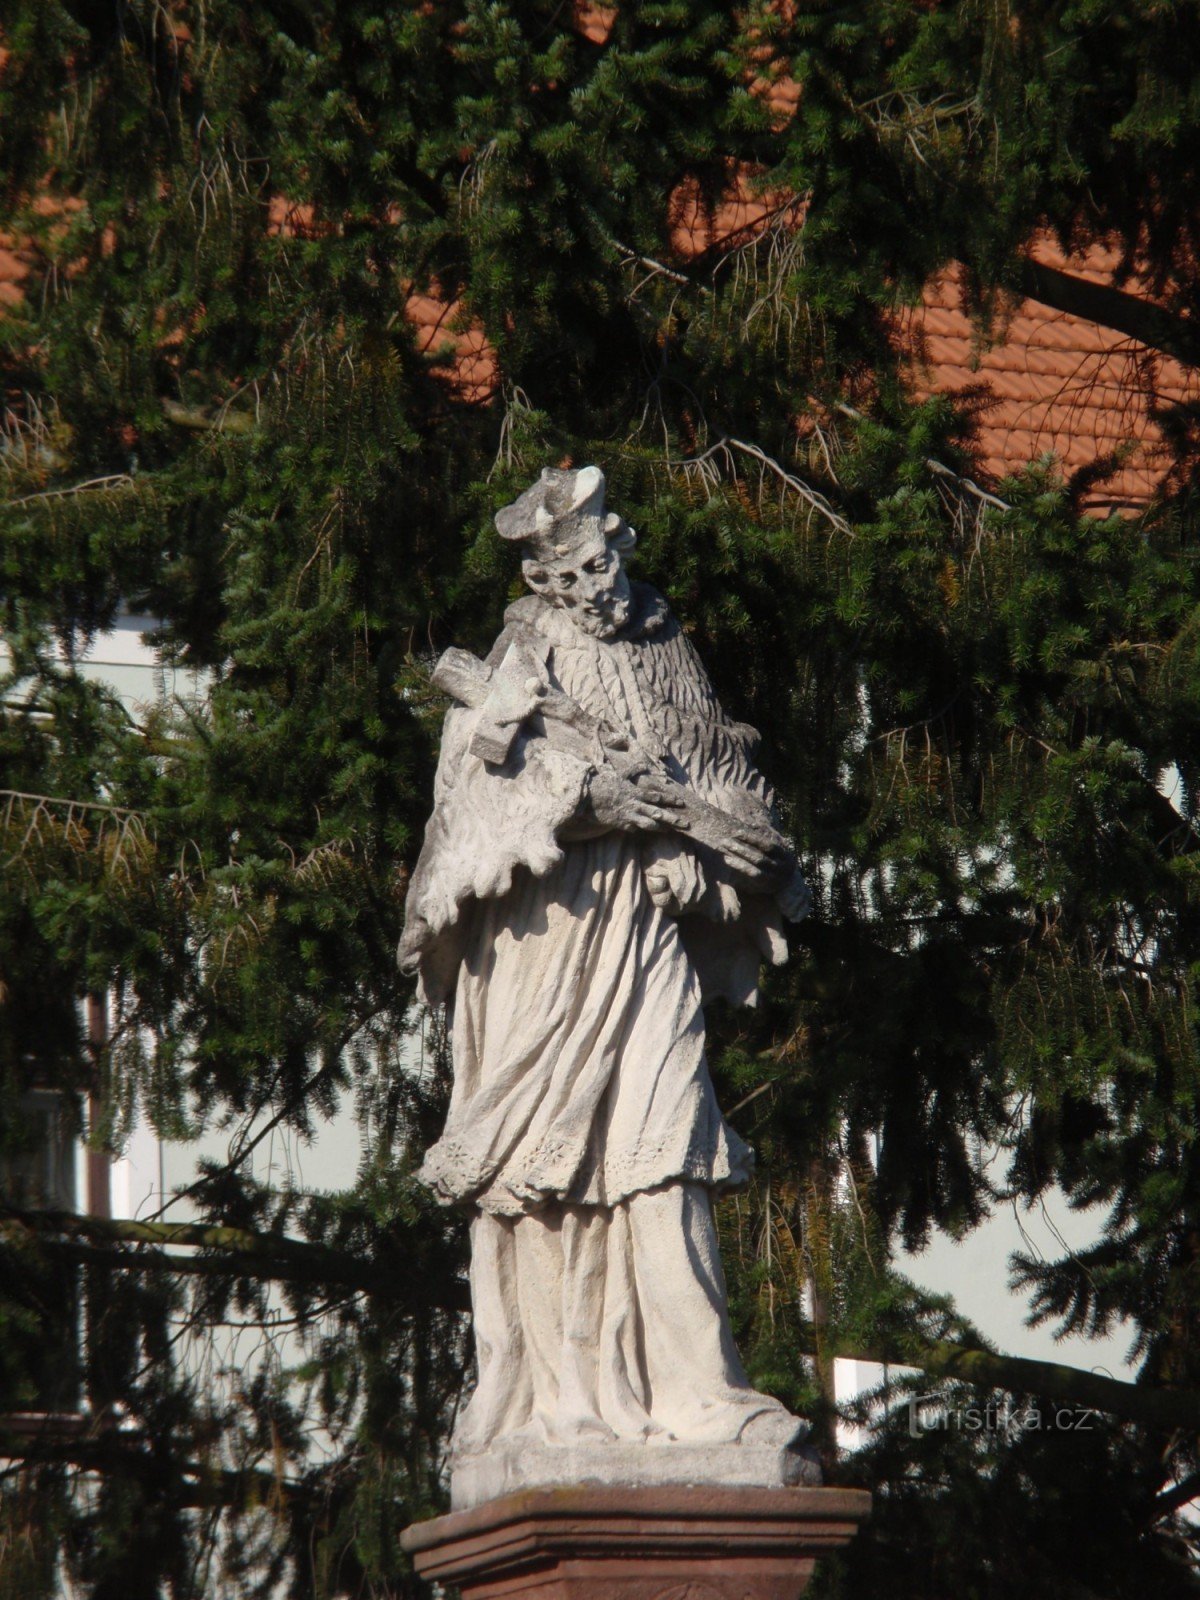 Statua di S. Jan Nepomucký in Velká Bíteš